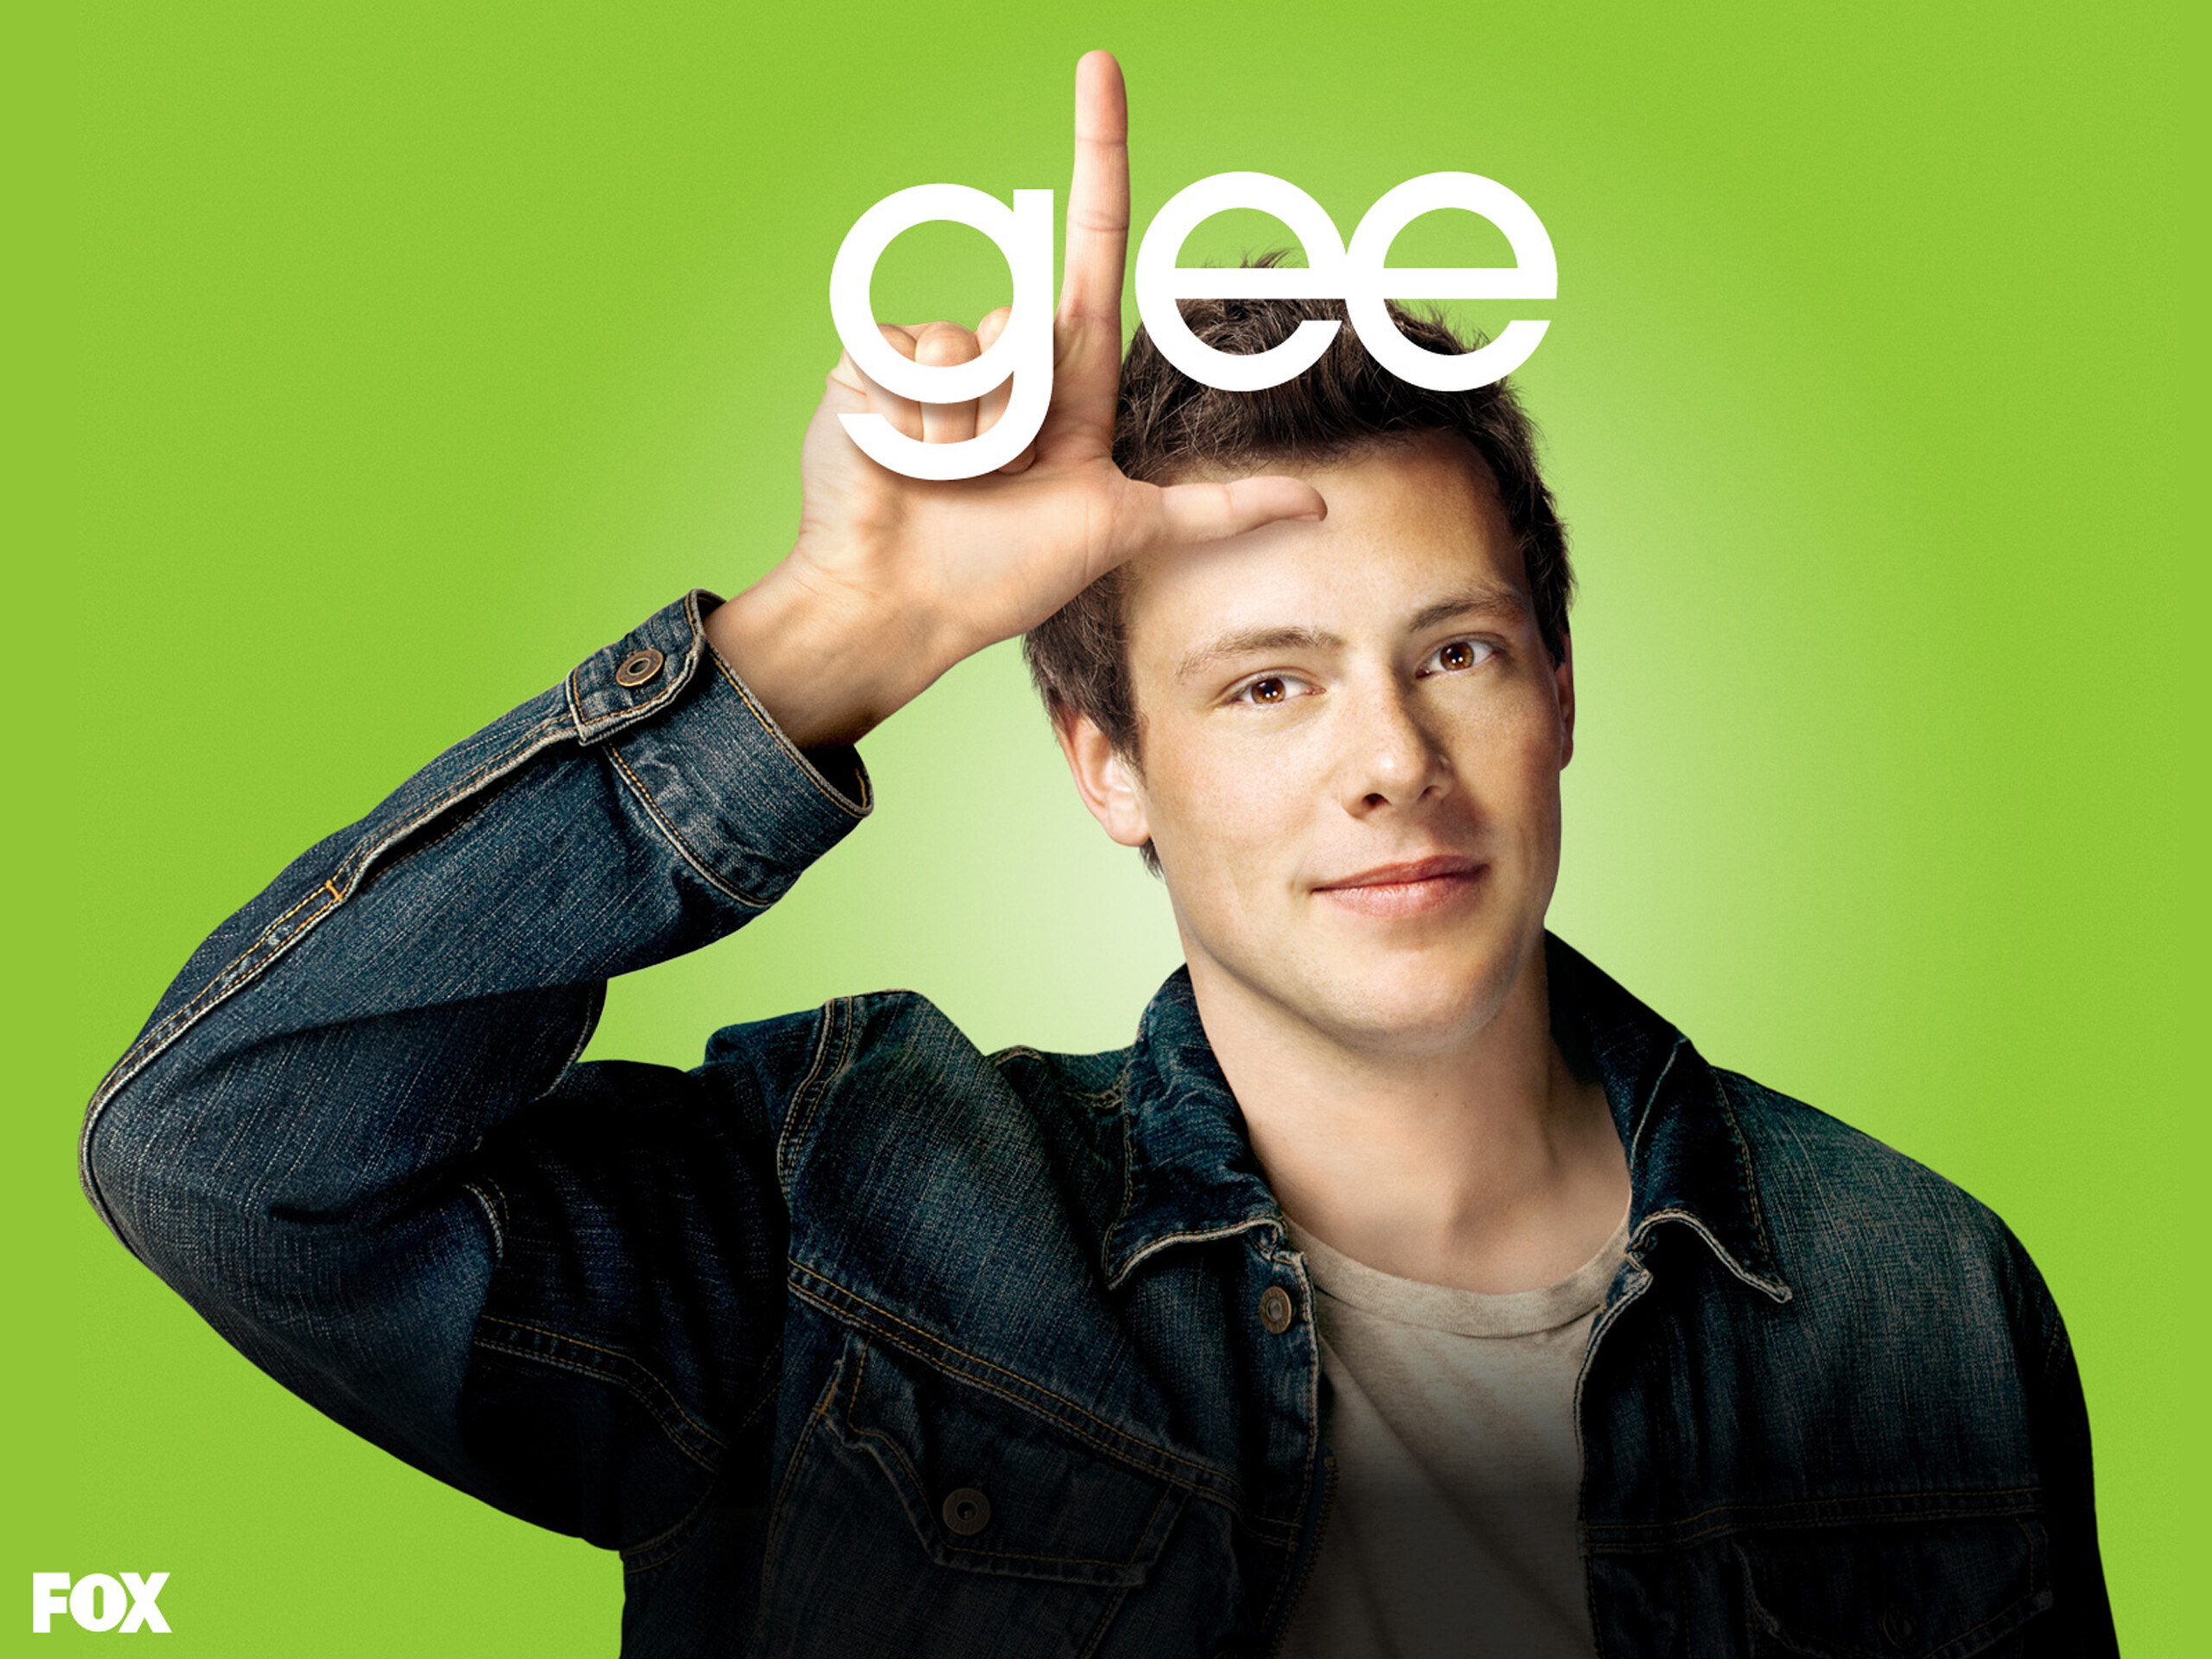 Glee (TV series): Cory Monteith as Finn Hudson, Initially the quarterback of high school football team. 2560x1920 HD Wallpaper.